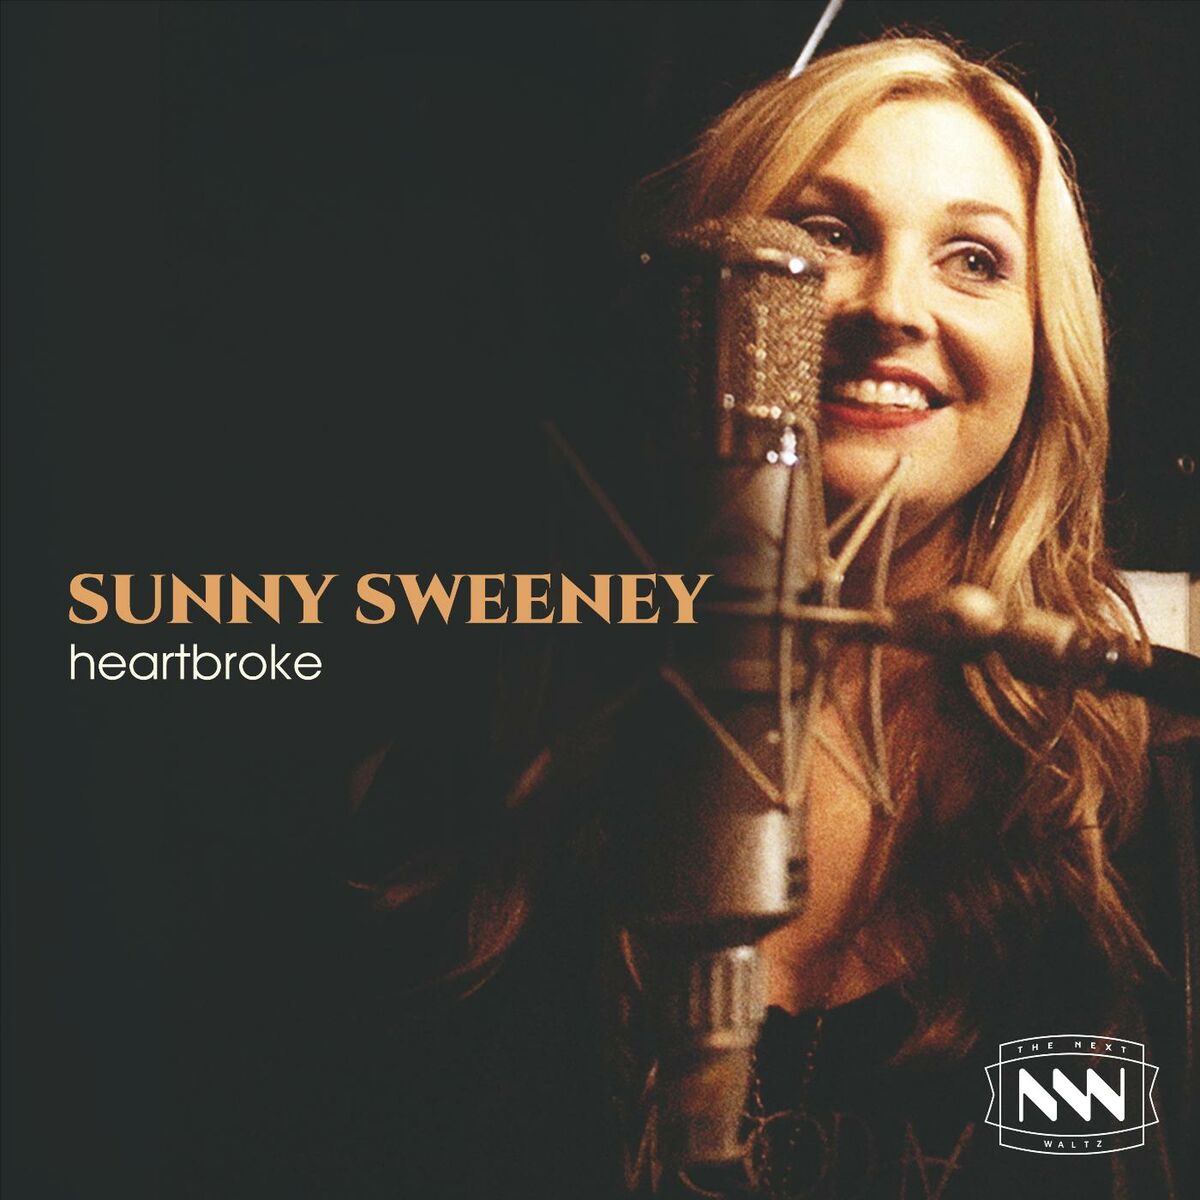 Sunny Sweeney: albums